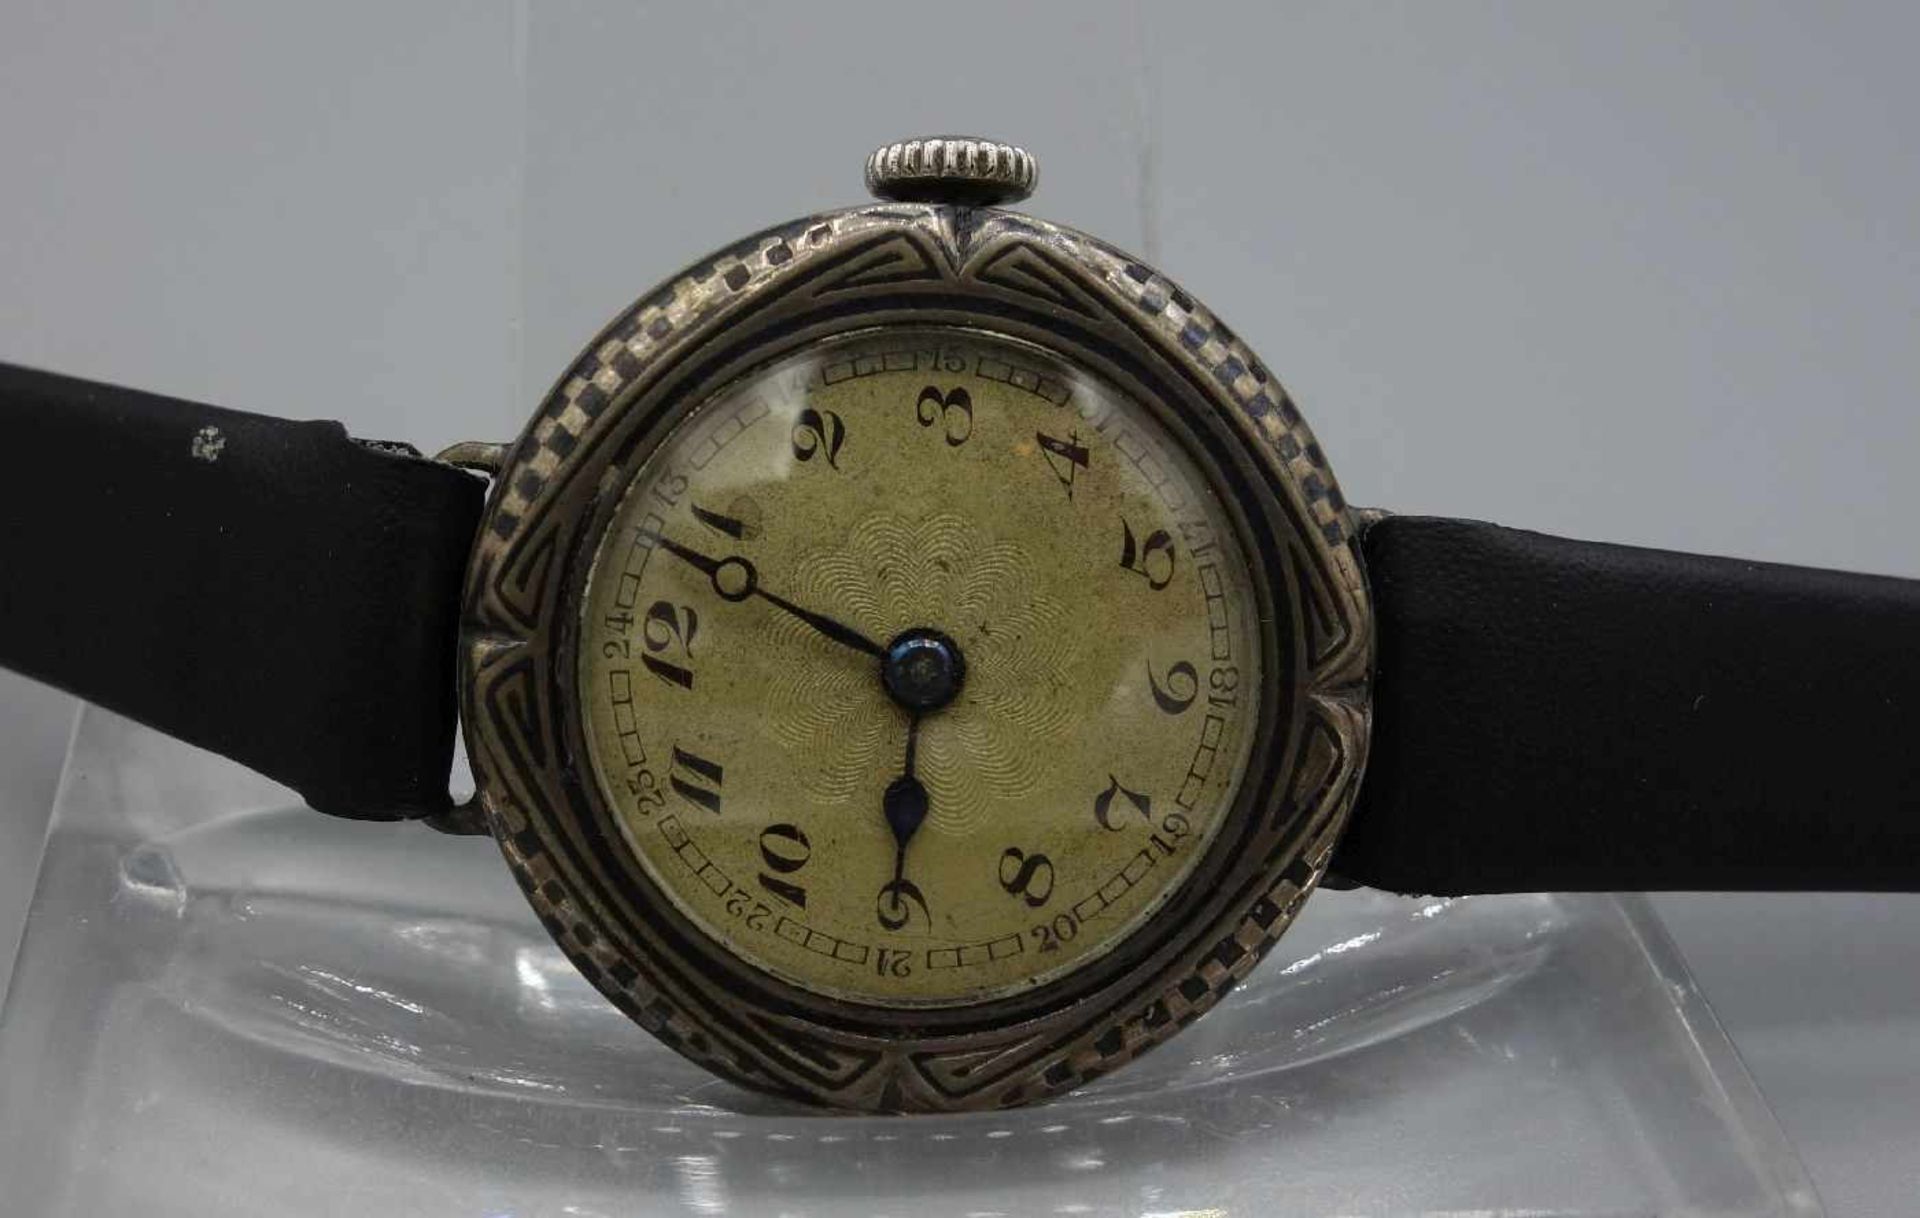 DAMEN ARMBANDUHR / wristwatch, 1. H. 20. Jh., Handaufzug, deutsch / 800er Silber. Rundes